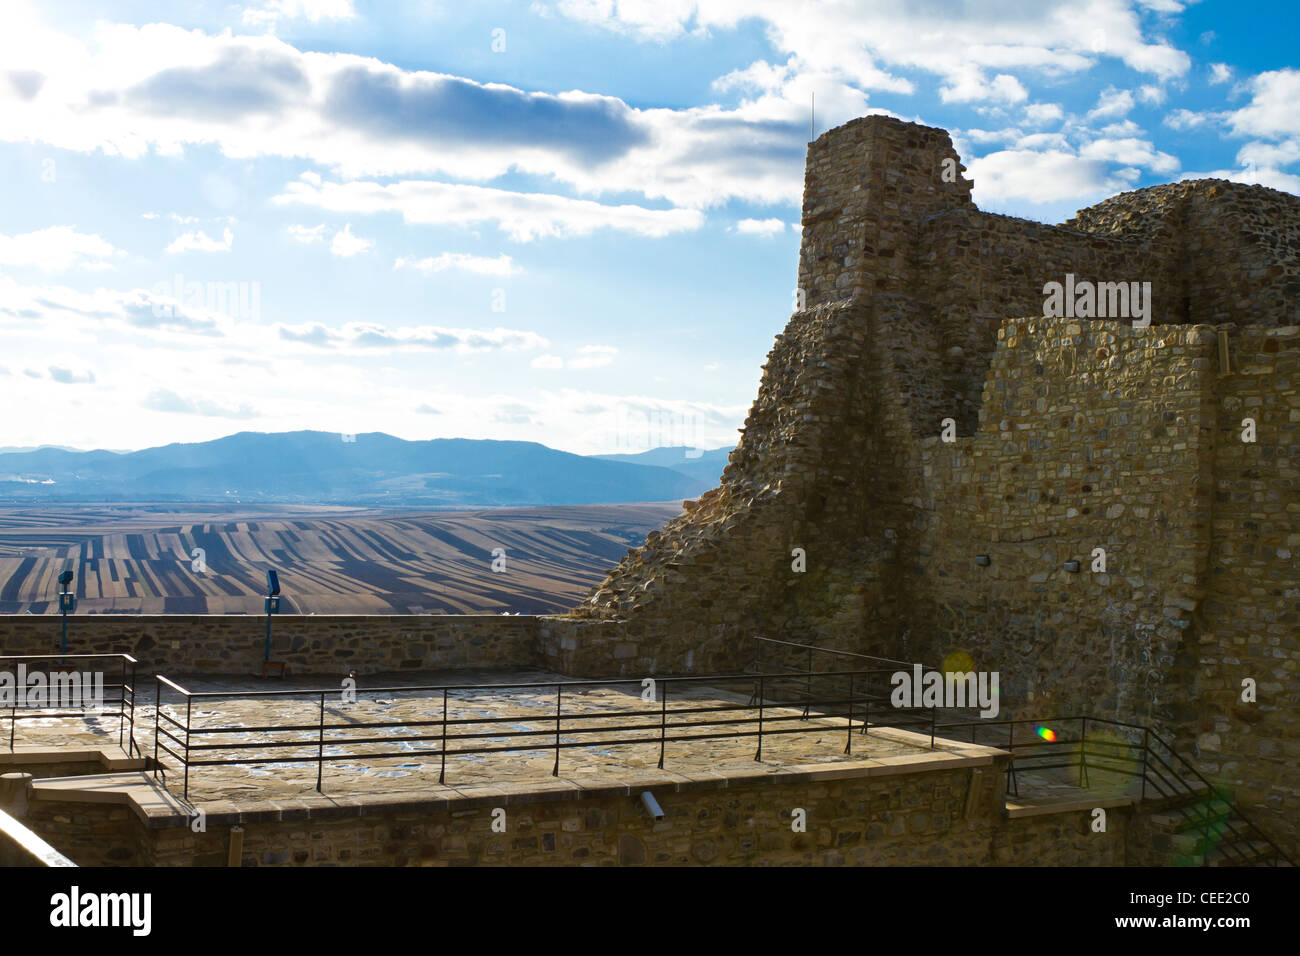 Ruinen des alten Schlosses in Ost-Europa - Rumänien Stockfoto